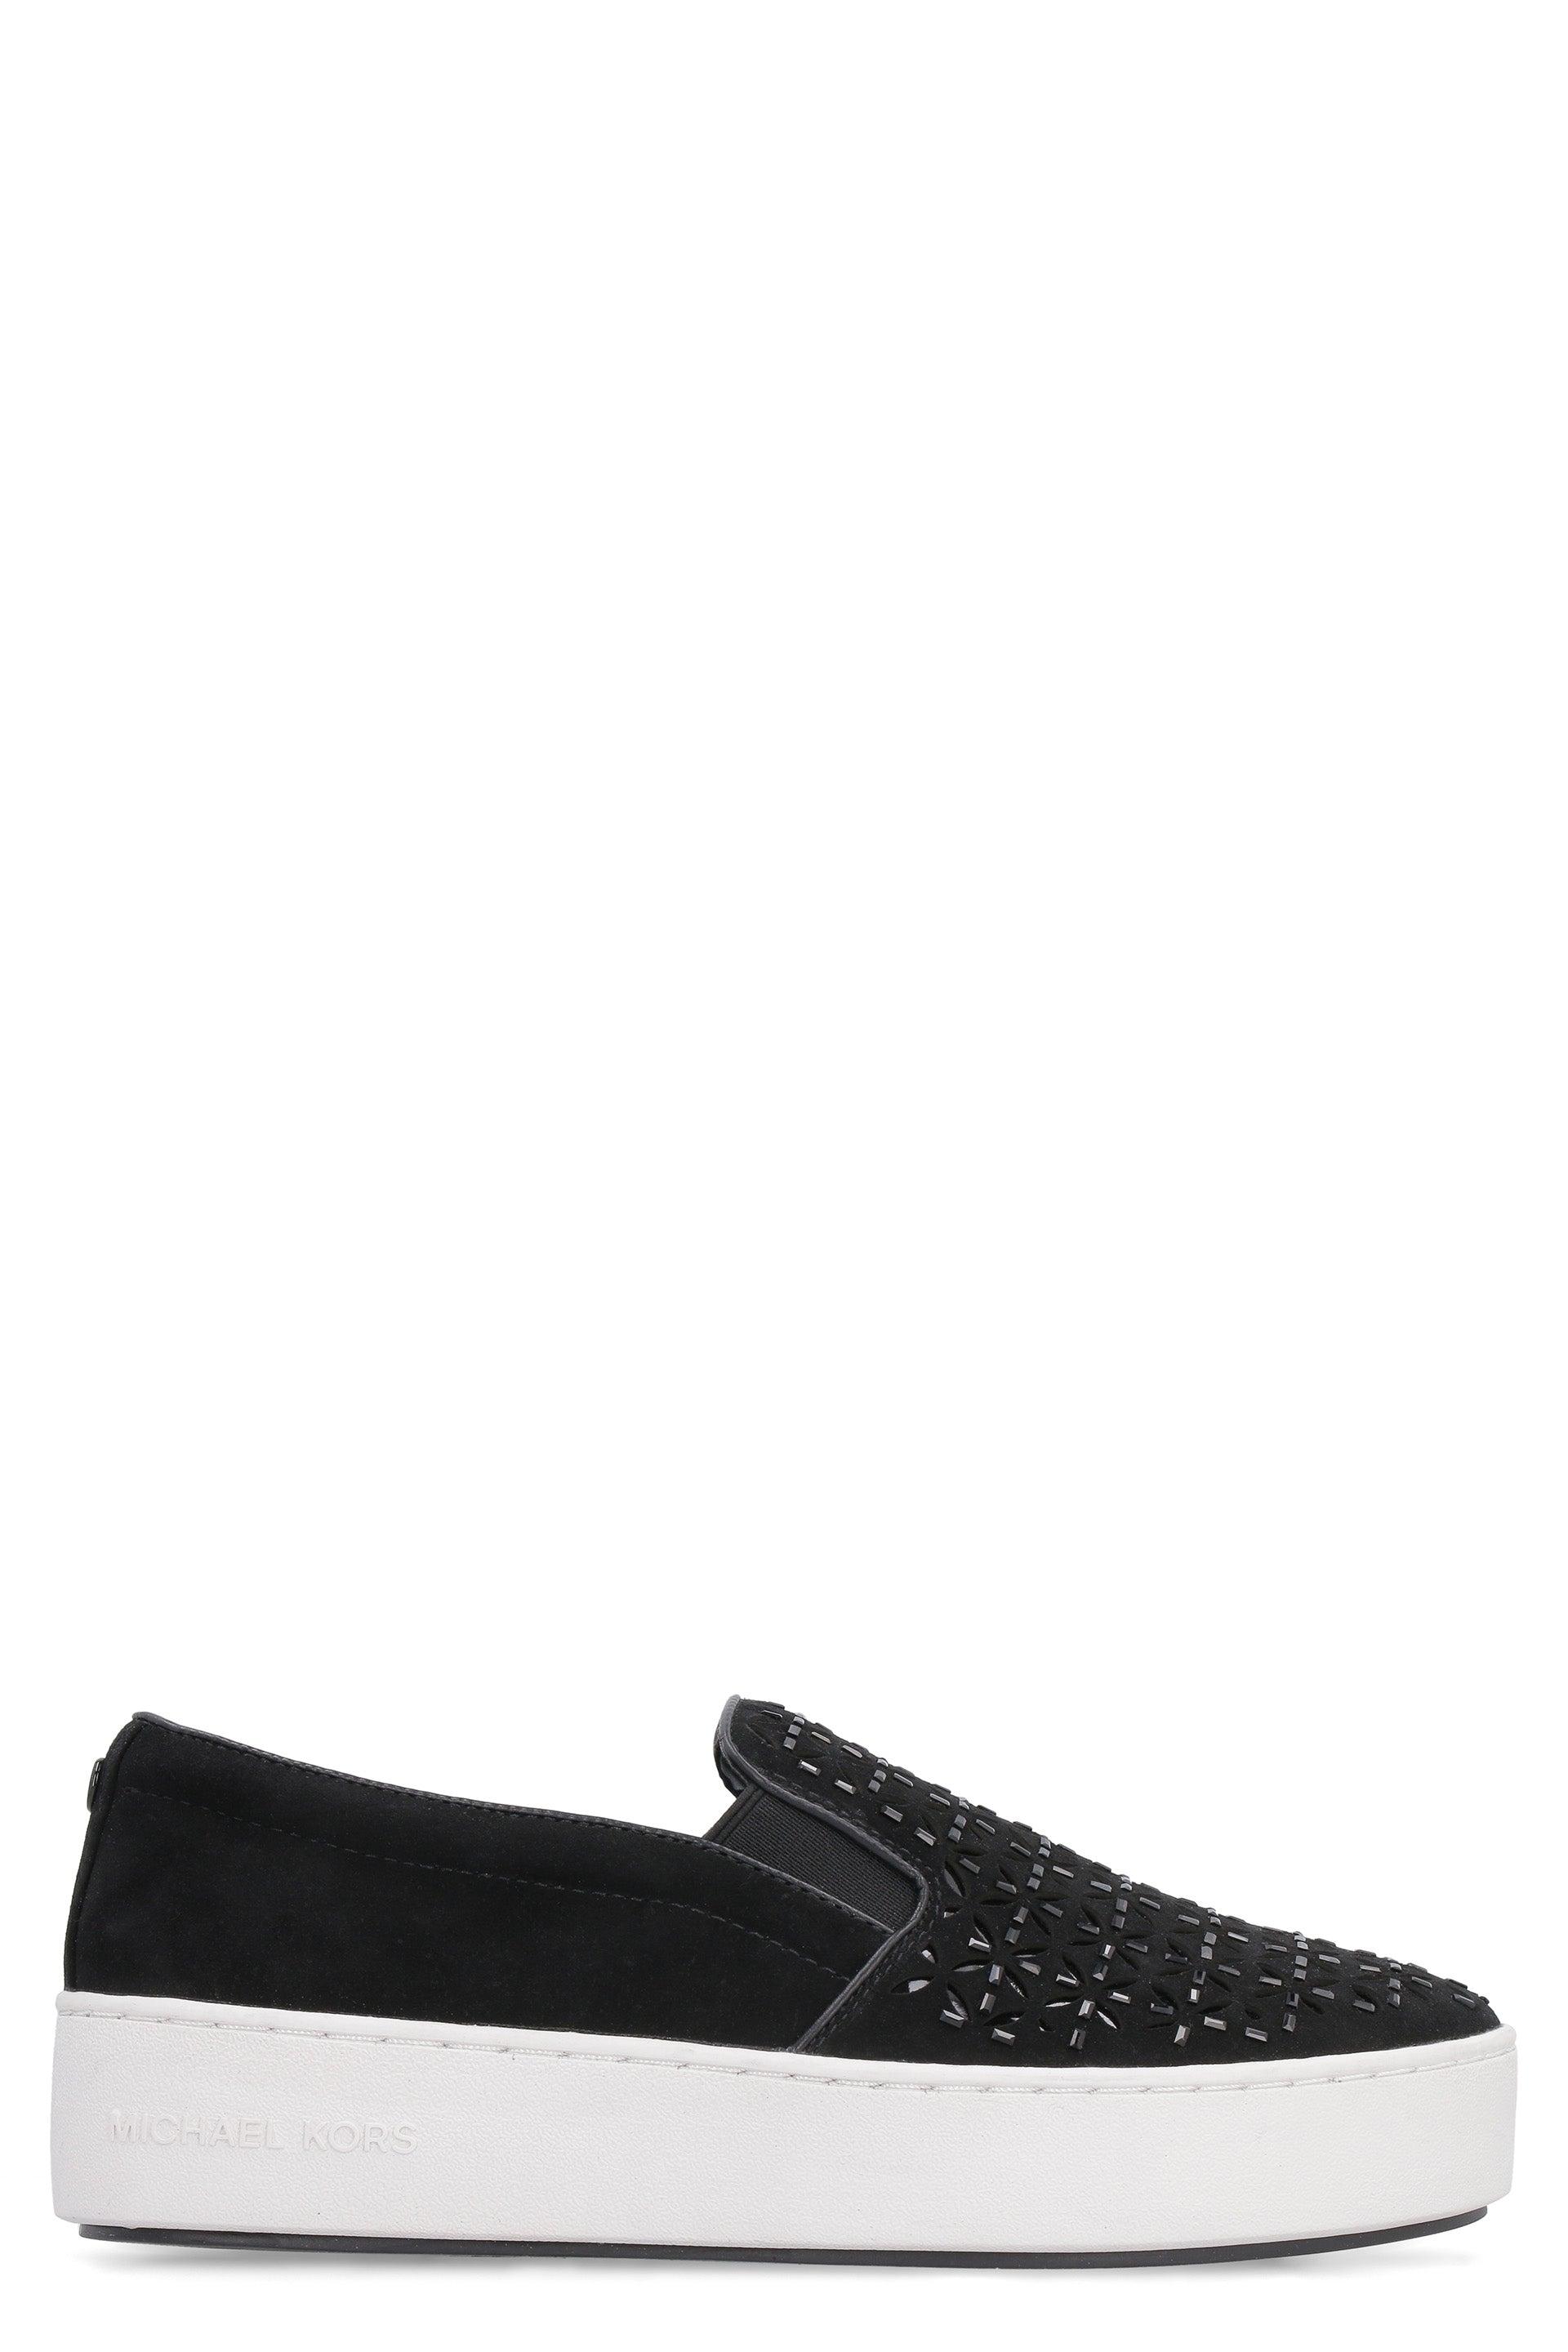 MICHAEL Michael Kors Trent Platform Sneakers in Black | Lyst